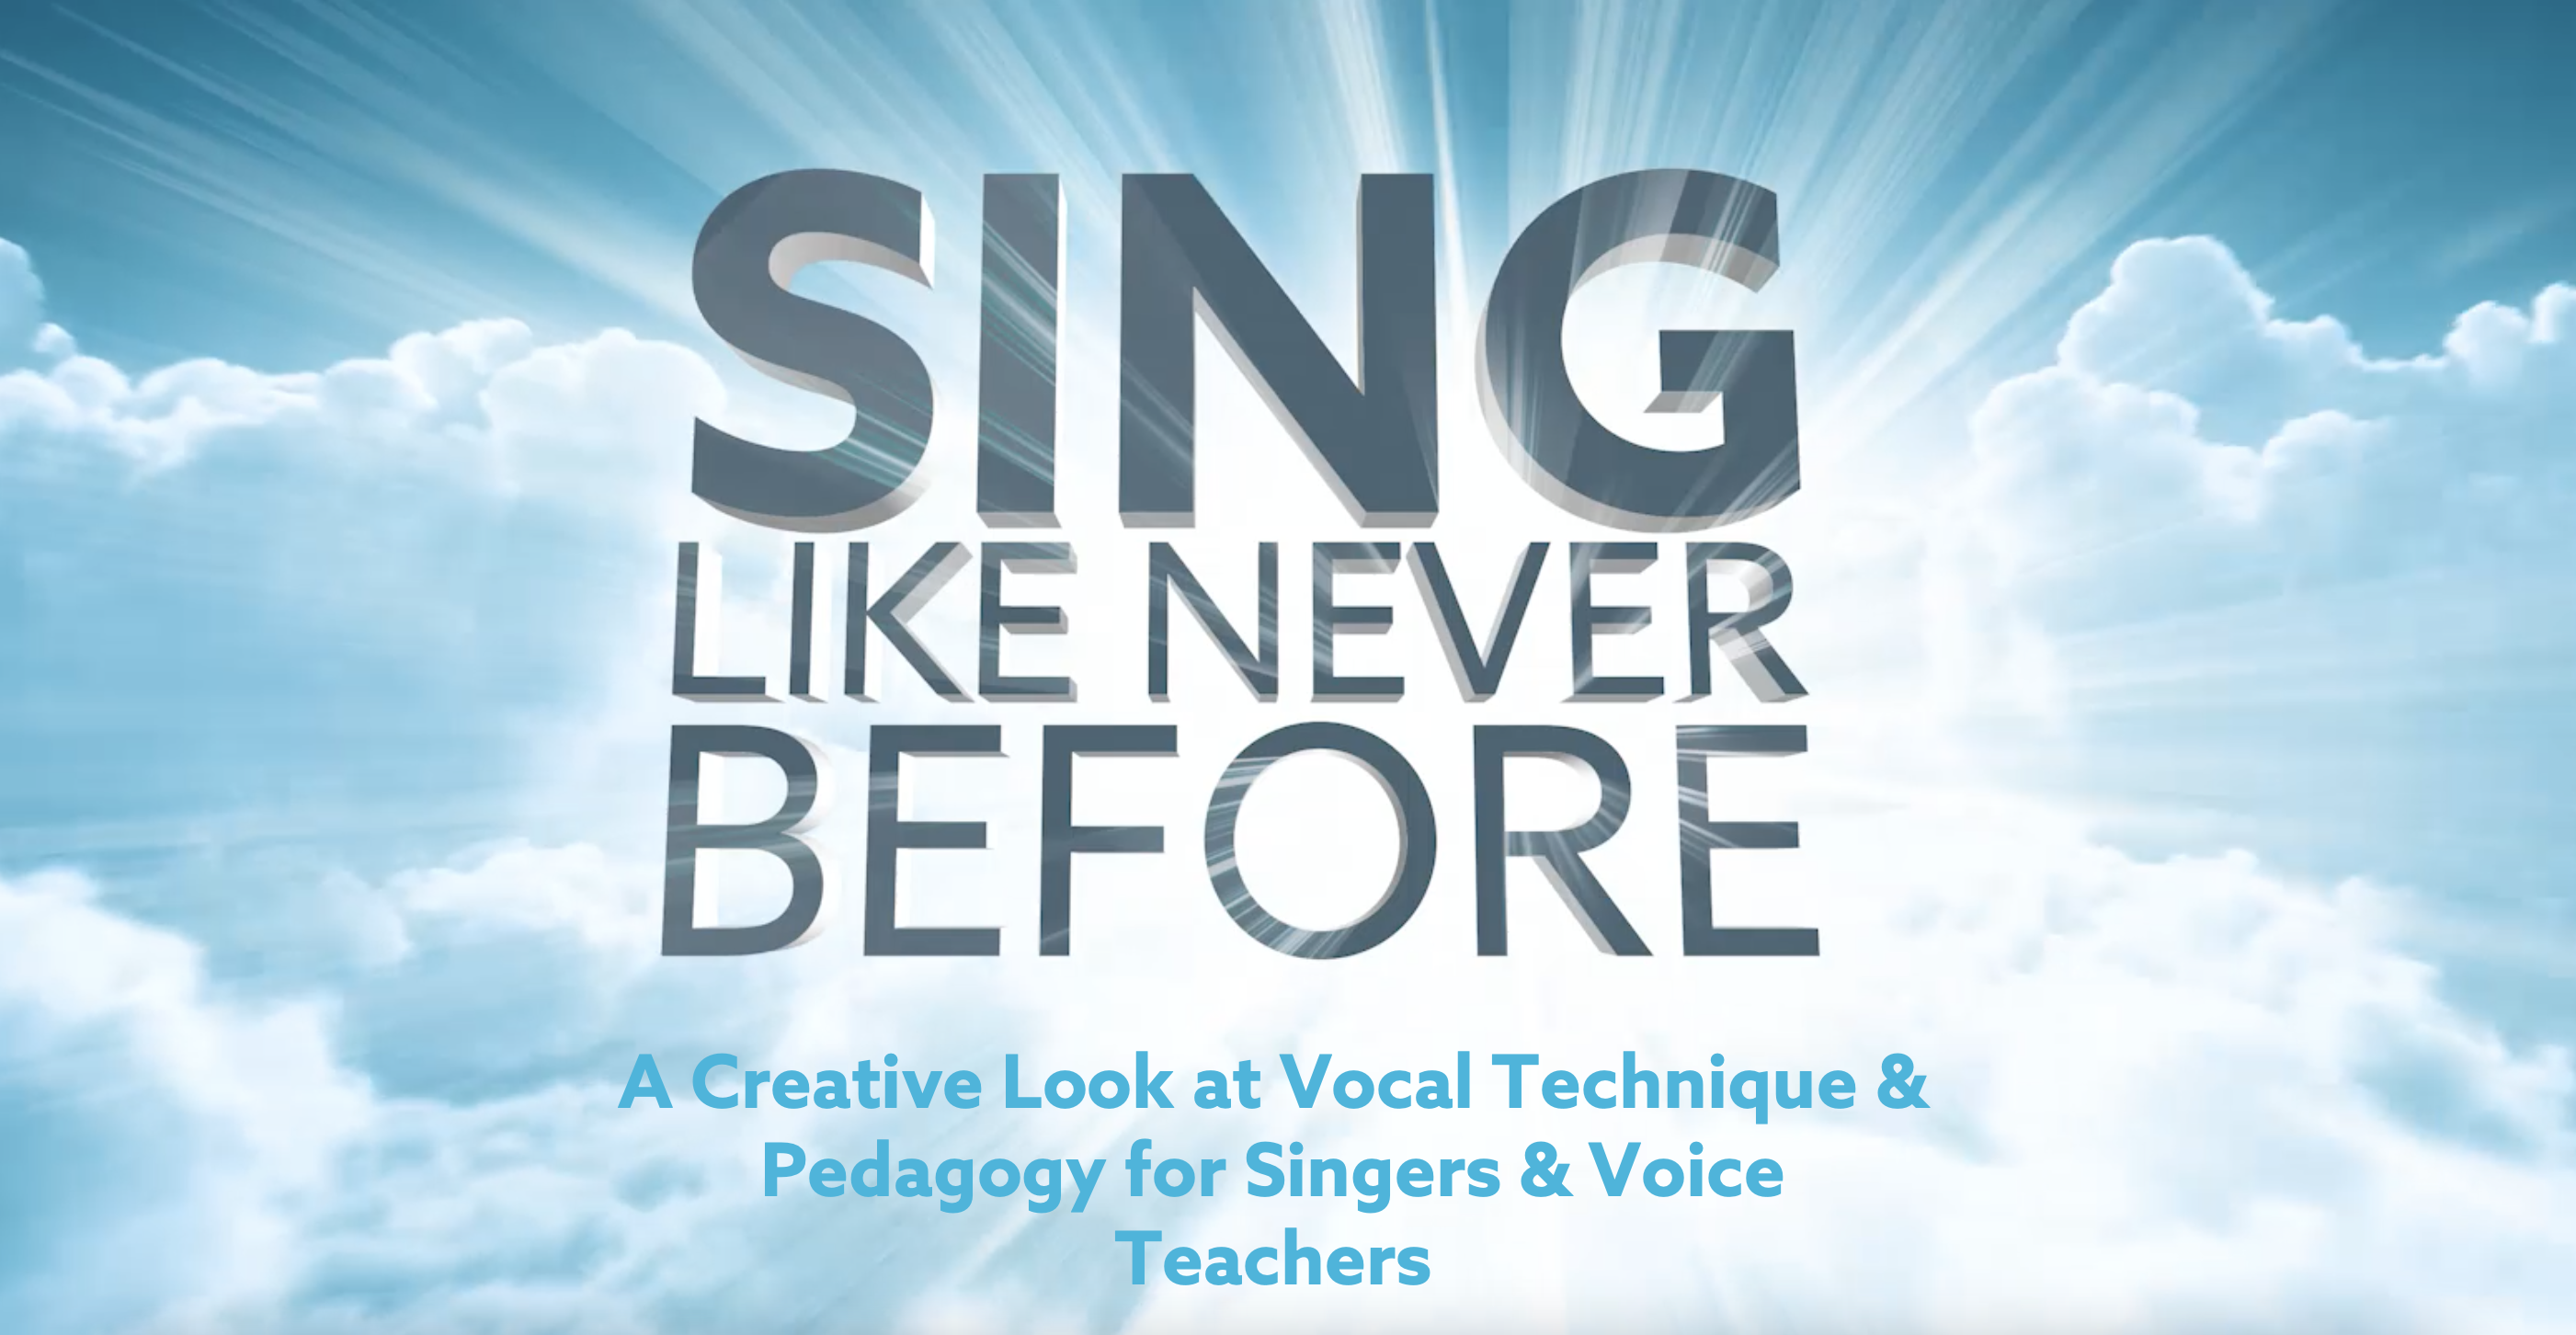 National Association of Teachers of Singing Reviews "Sing Like Never Before" hero